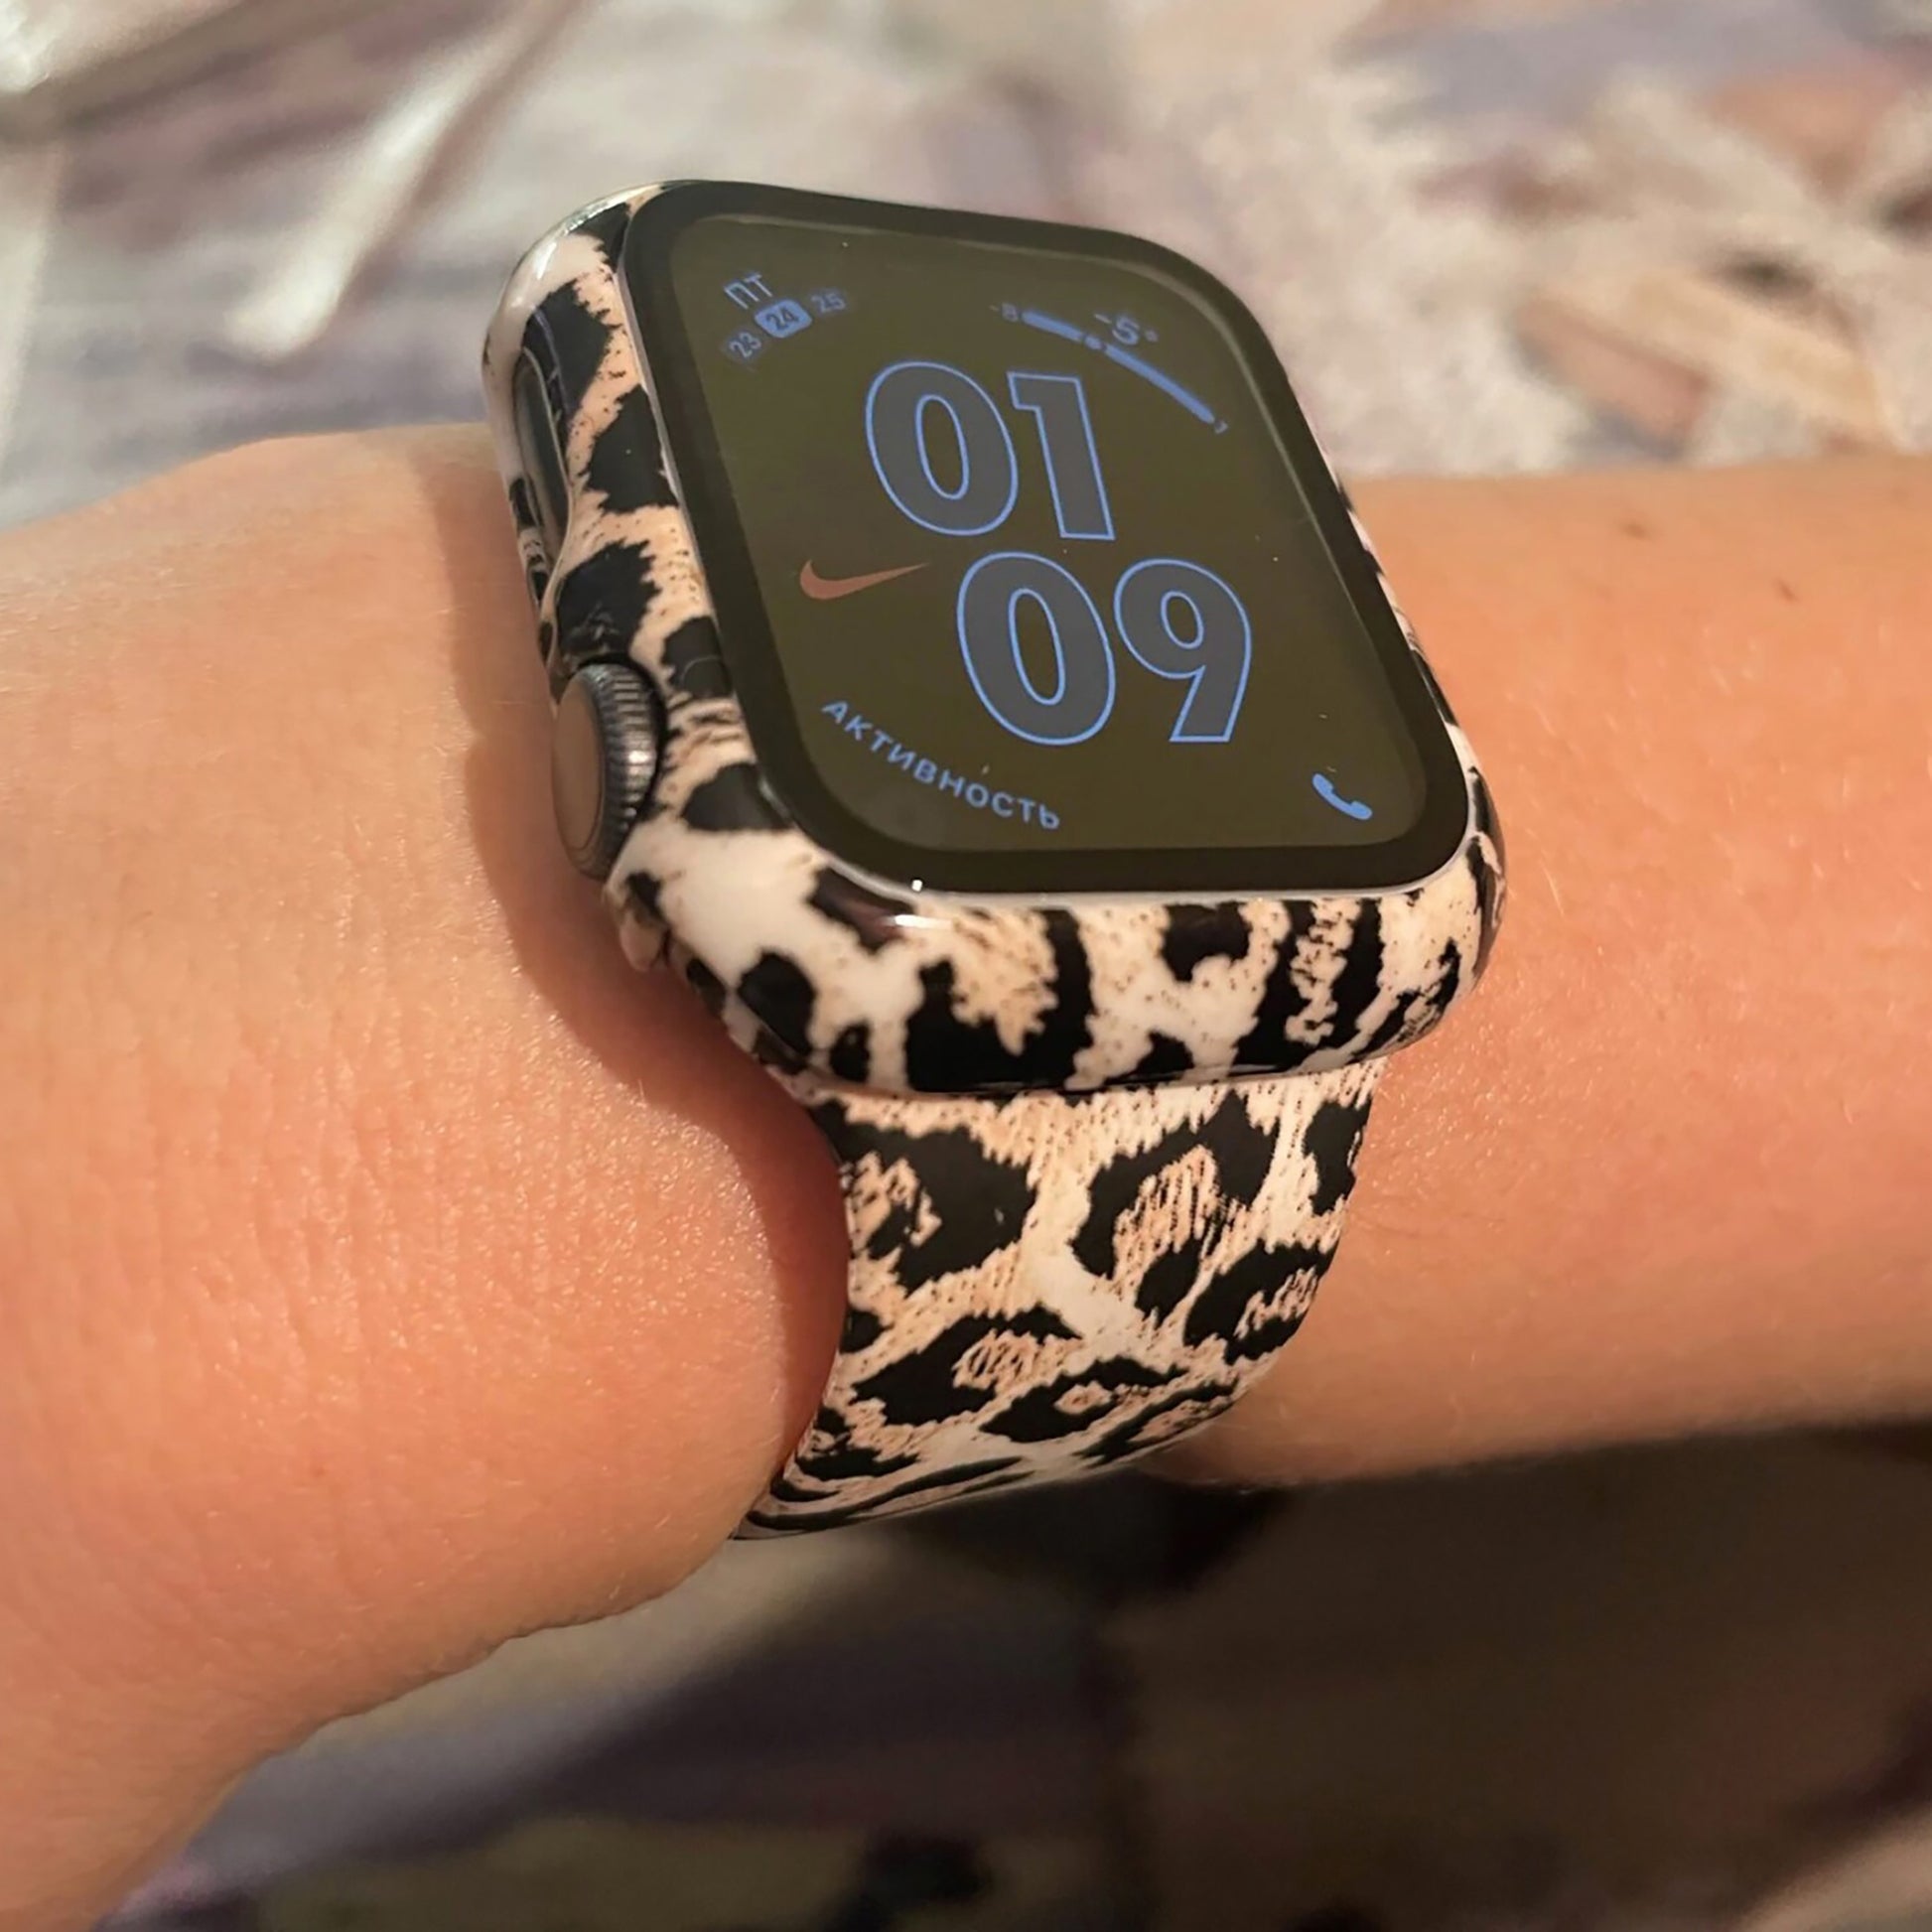 Smartwatch Silicone Bands Leopard Print Cheetah Watch 